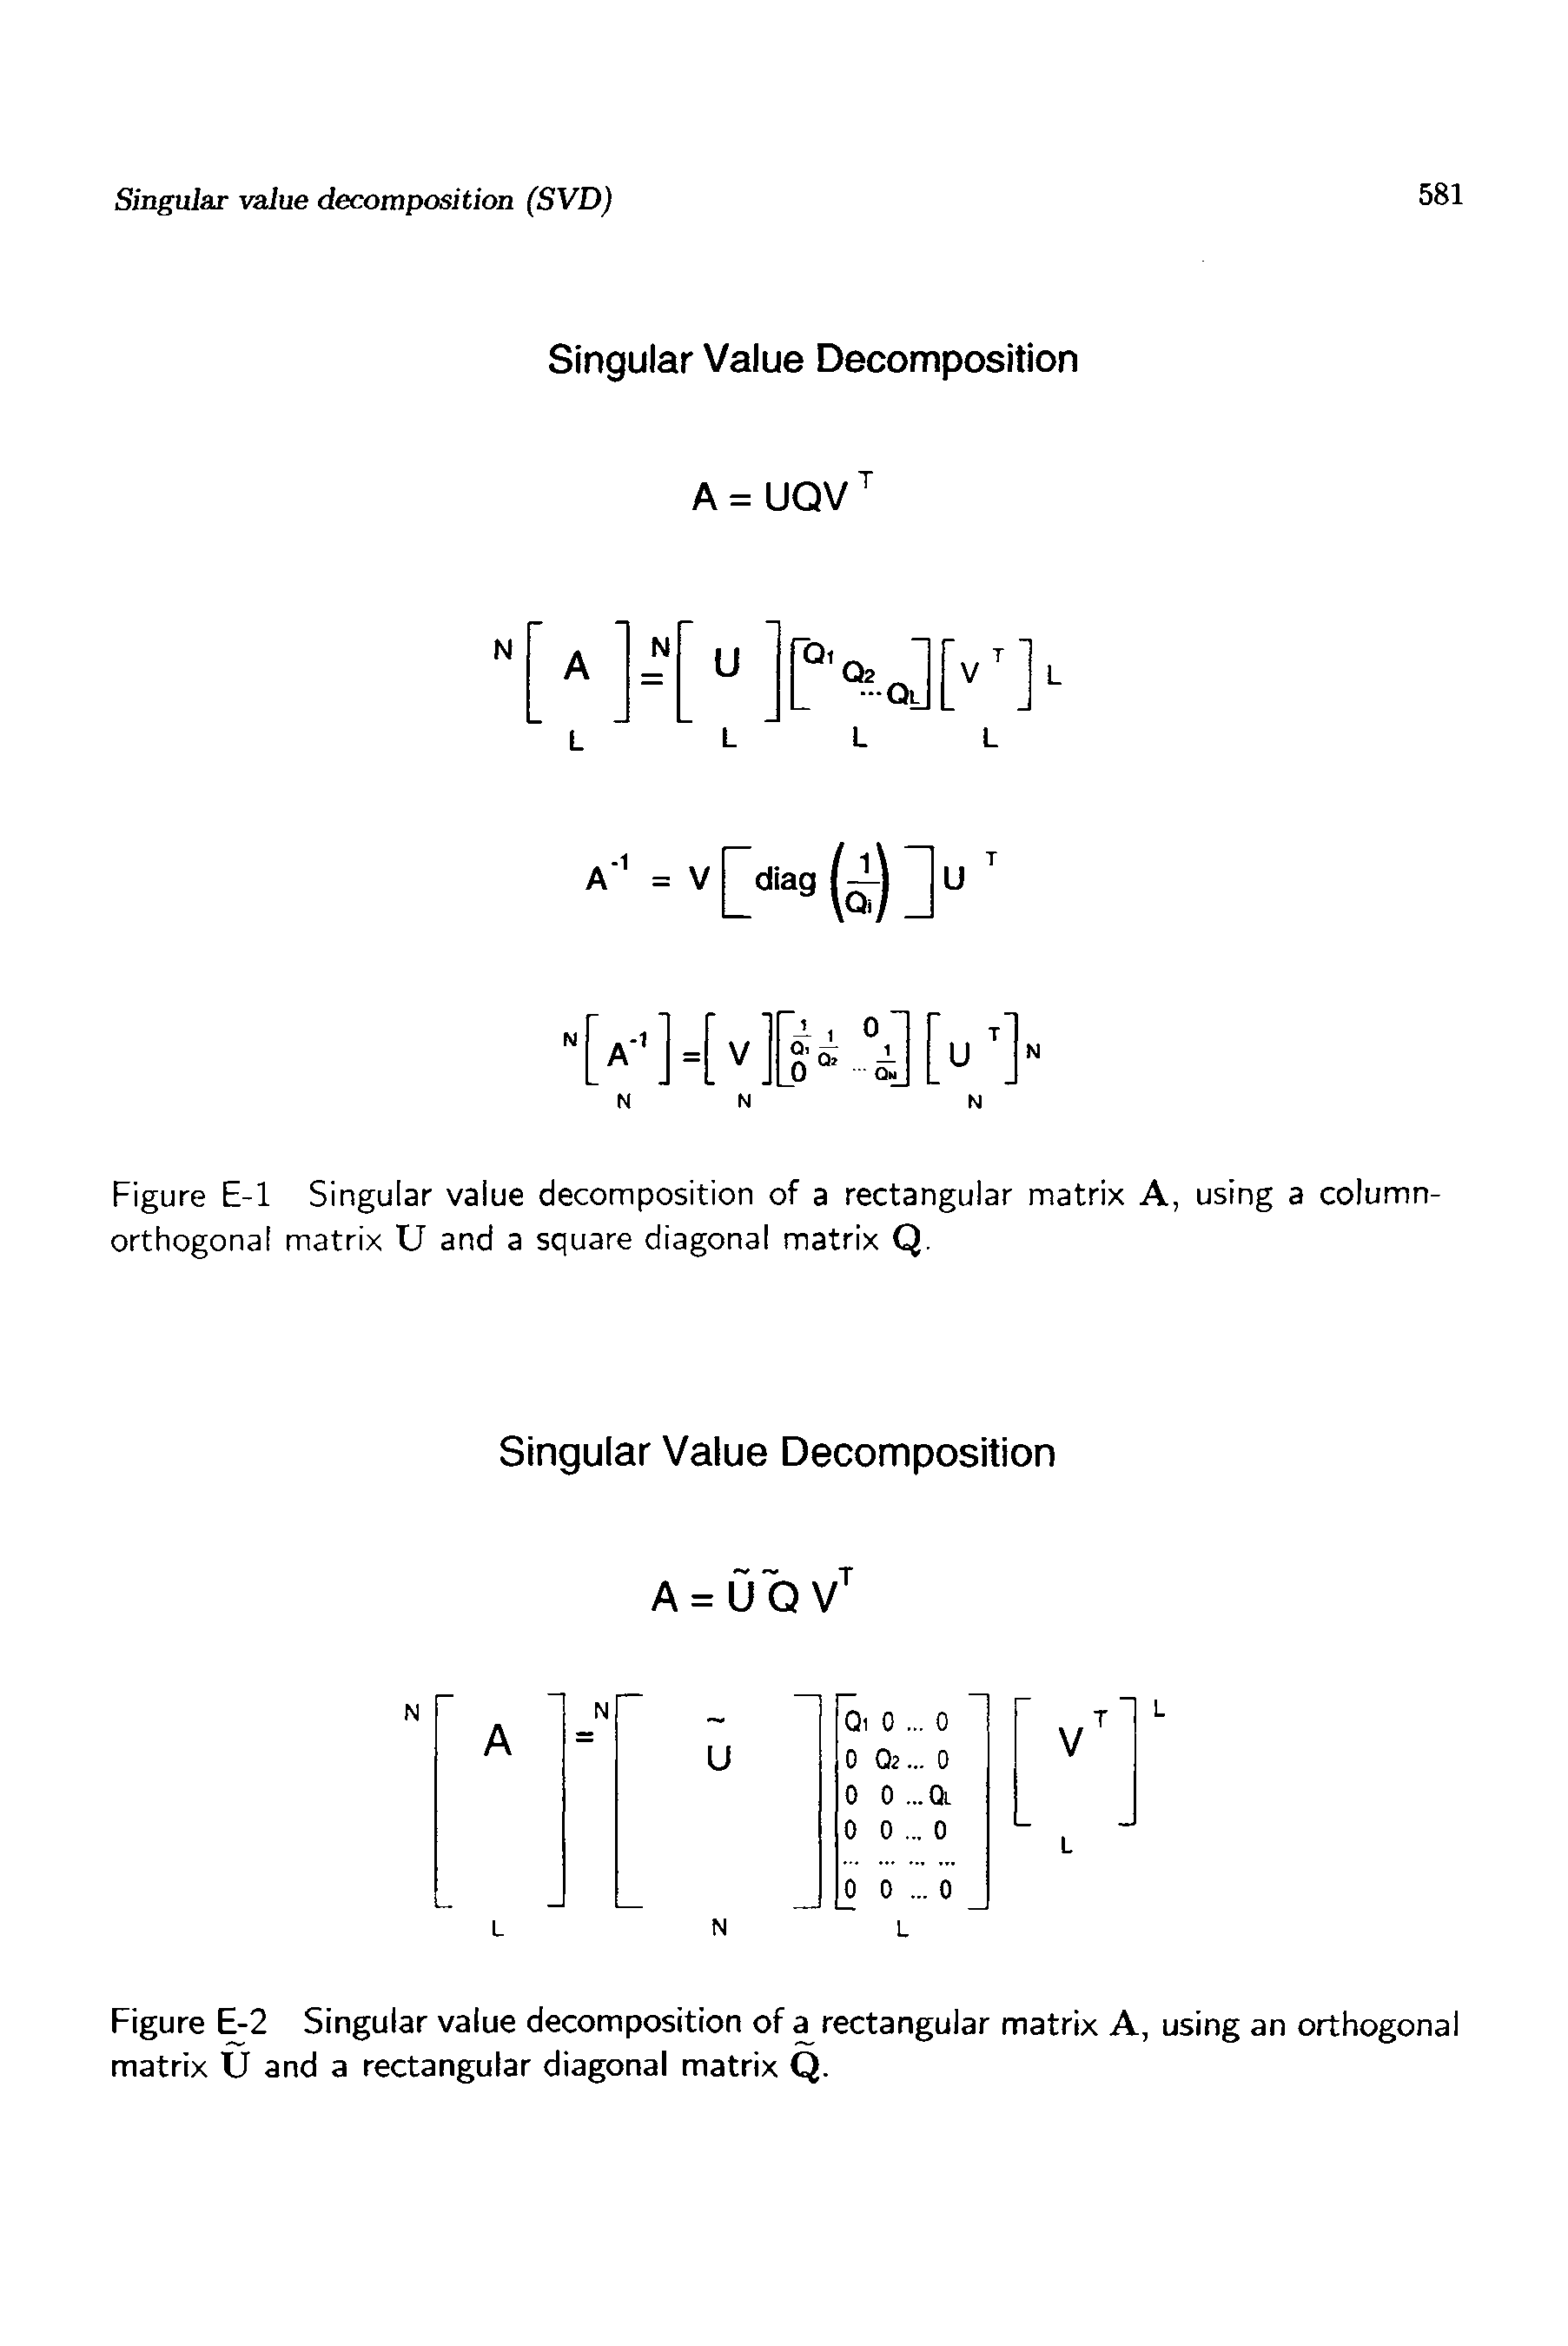 Figure E-1 Singular value decomposition of a rectangular matrix A, using a column-orthogonal matrix U and a square diagonal matrix Q.